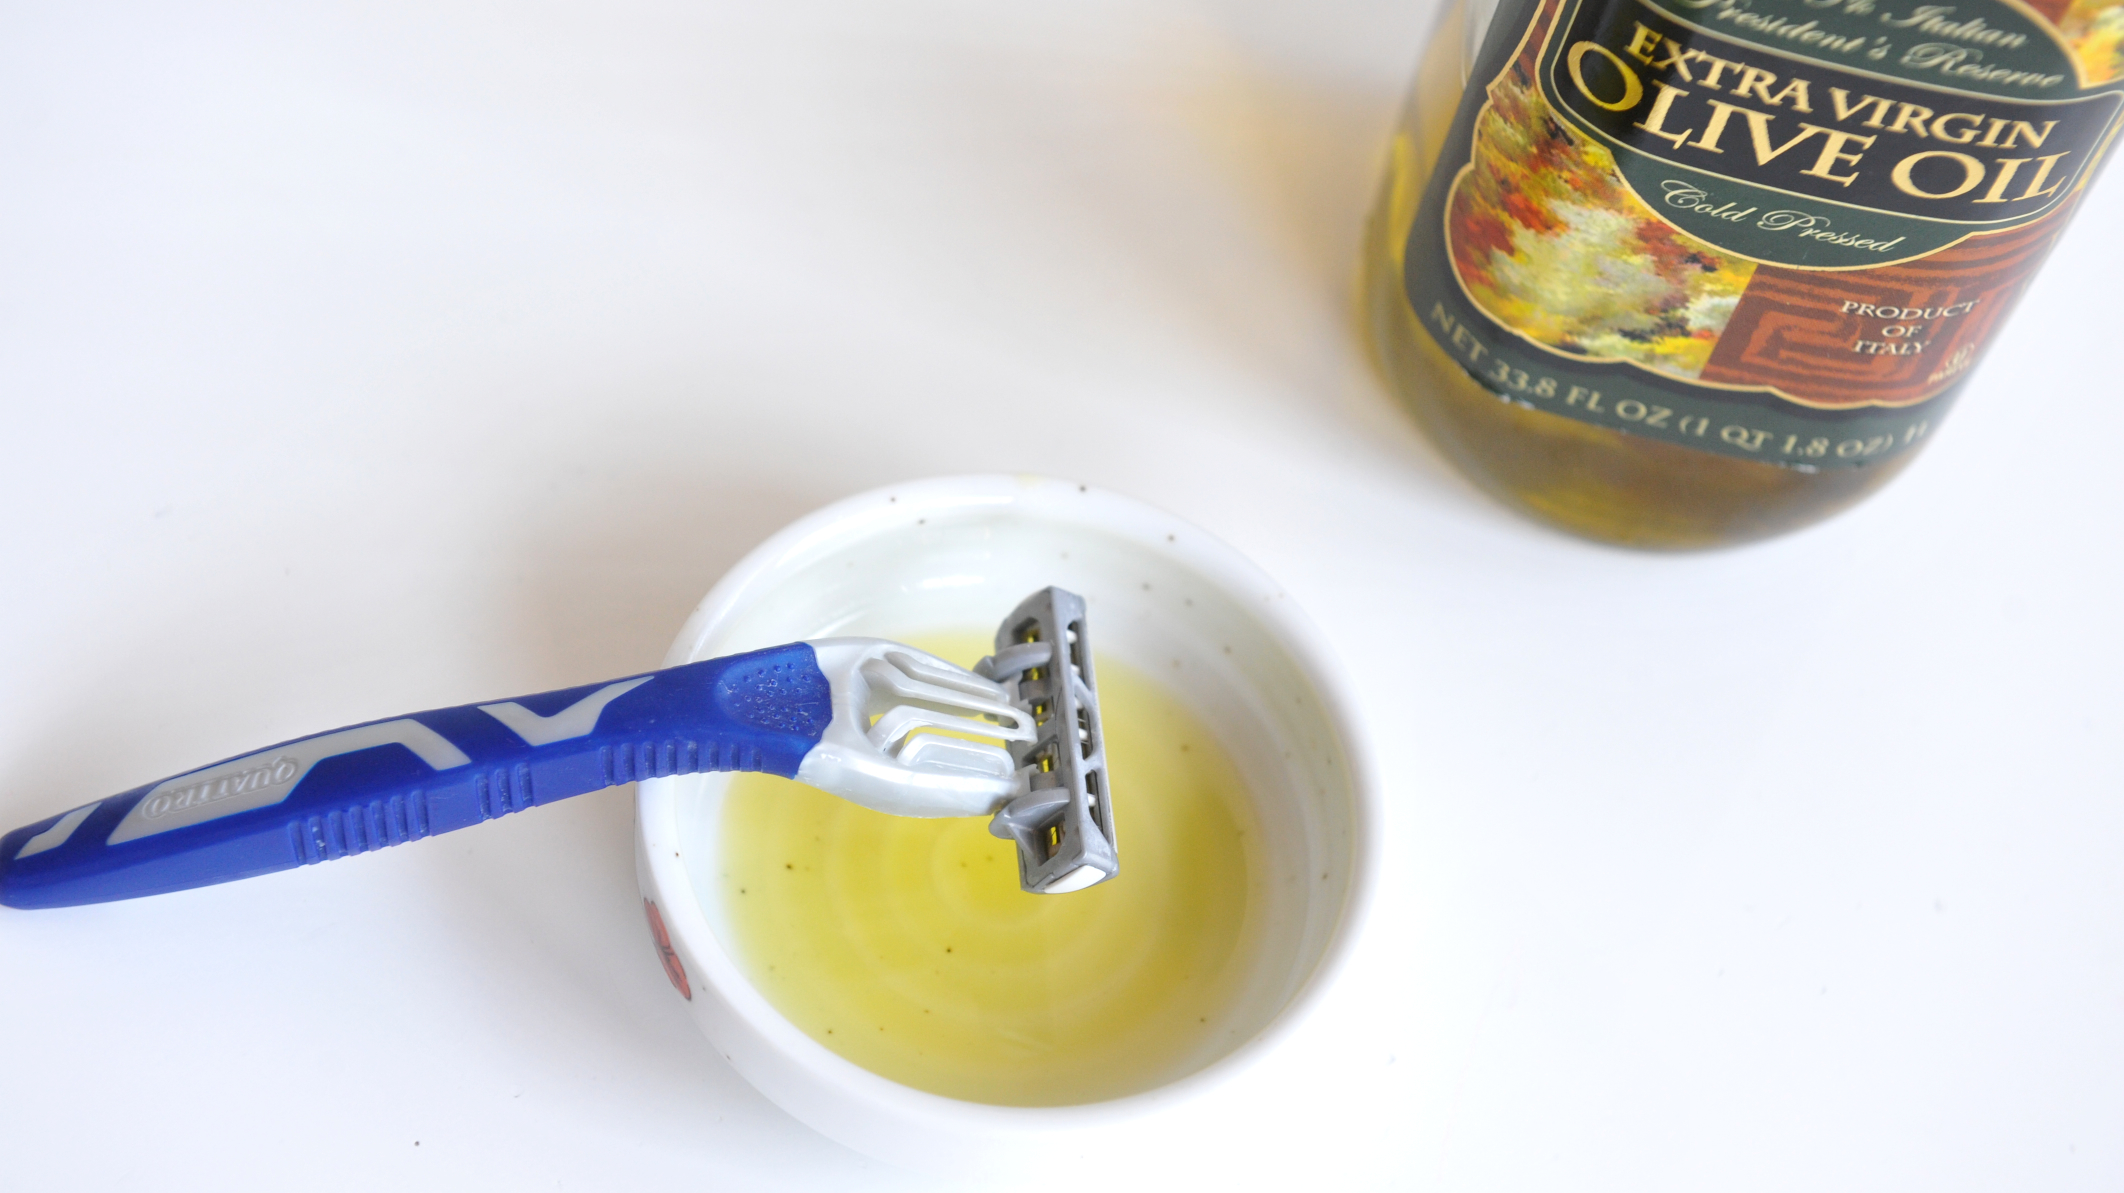 Shave Olive Oil